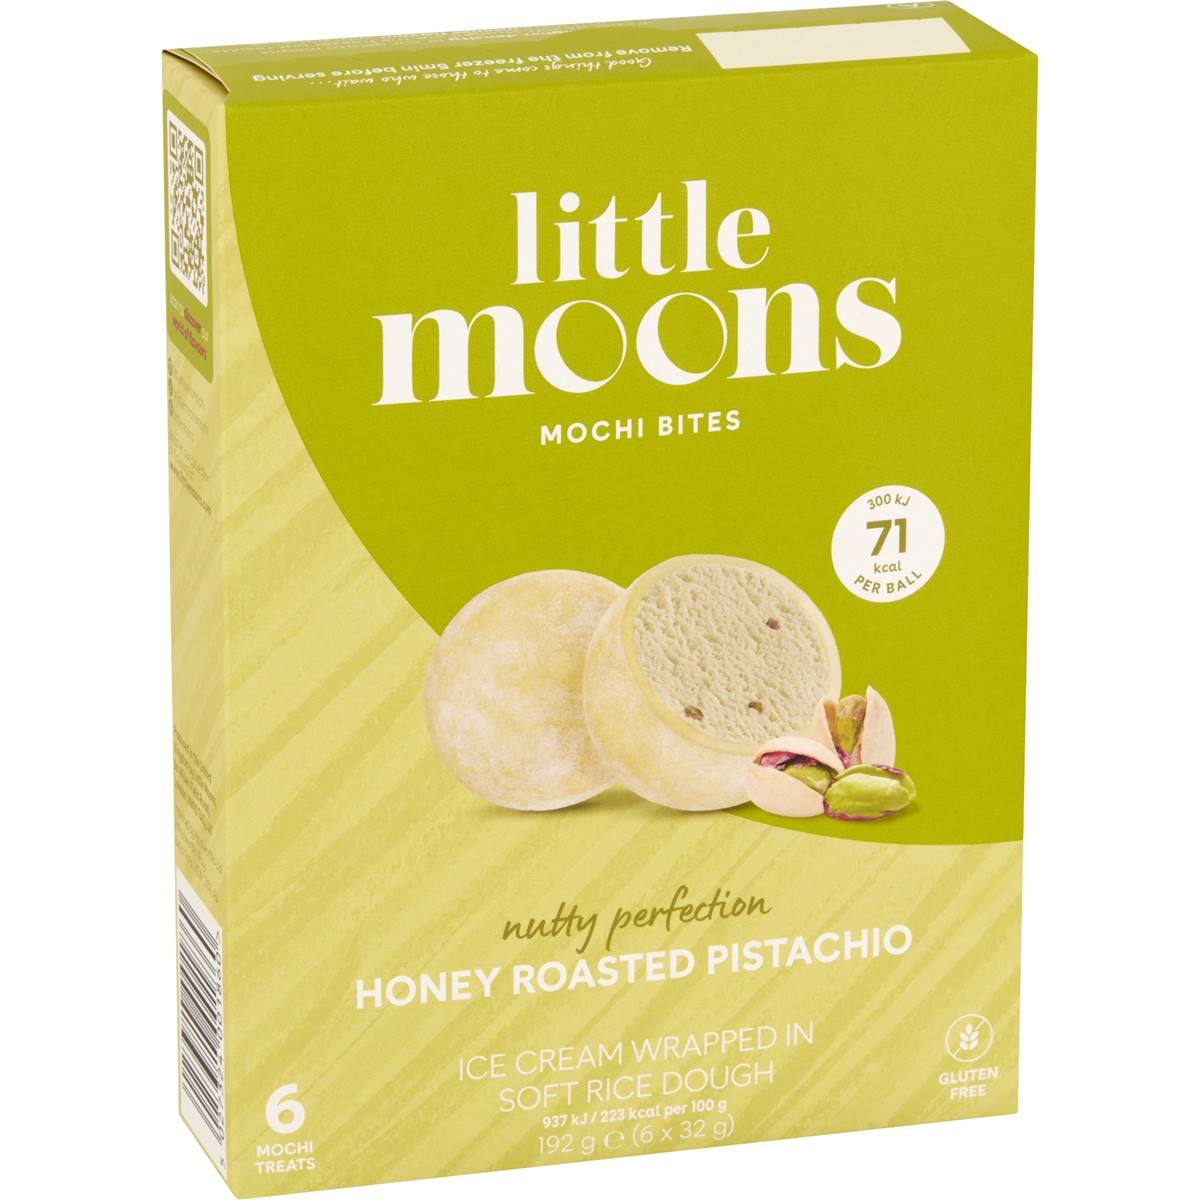 Calories in Little Moons Honey Roasted Pistachio Mochi Bites